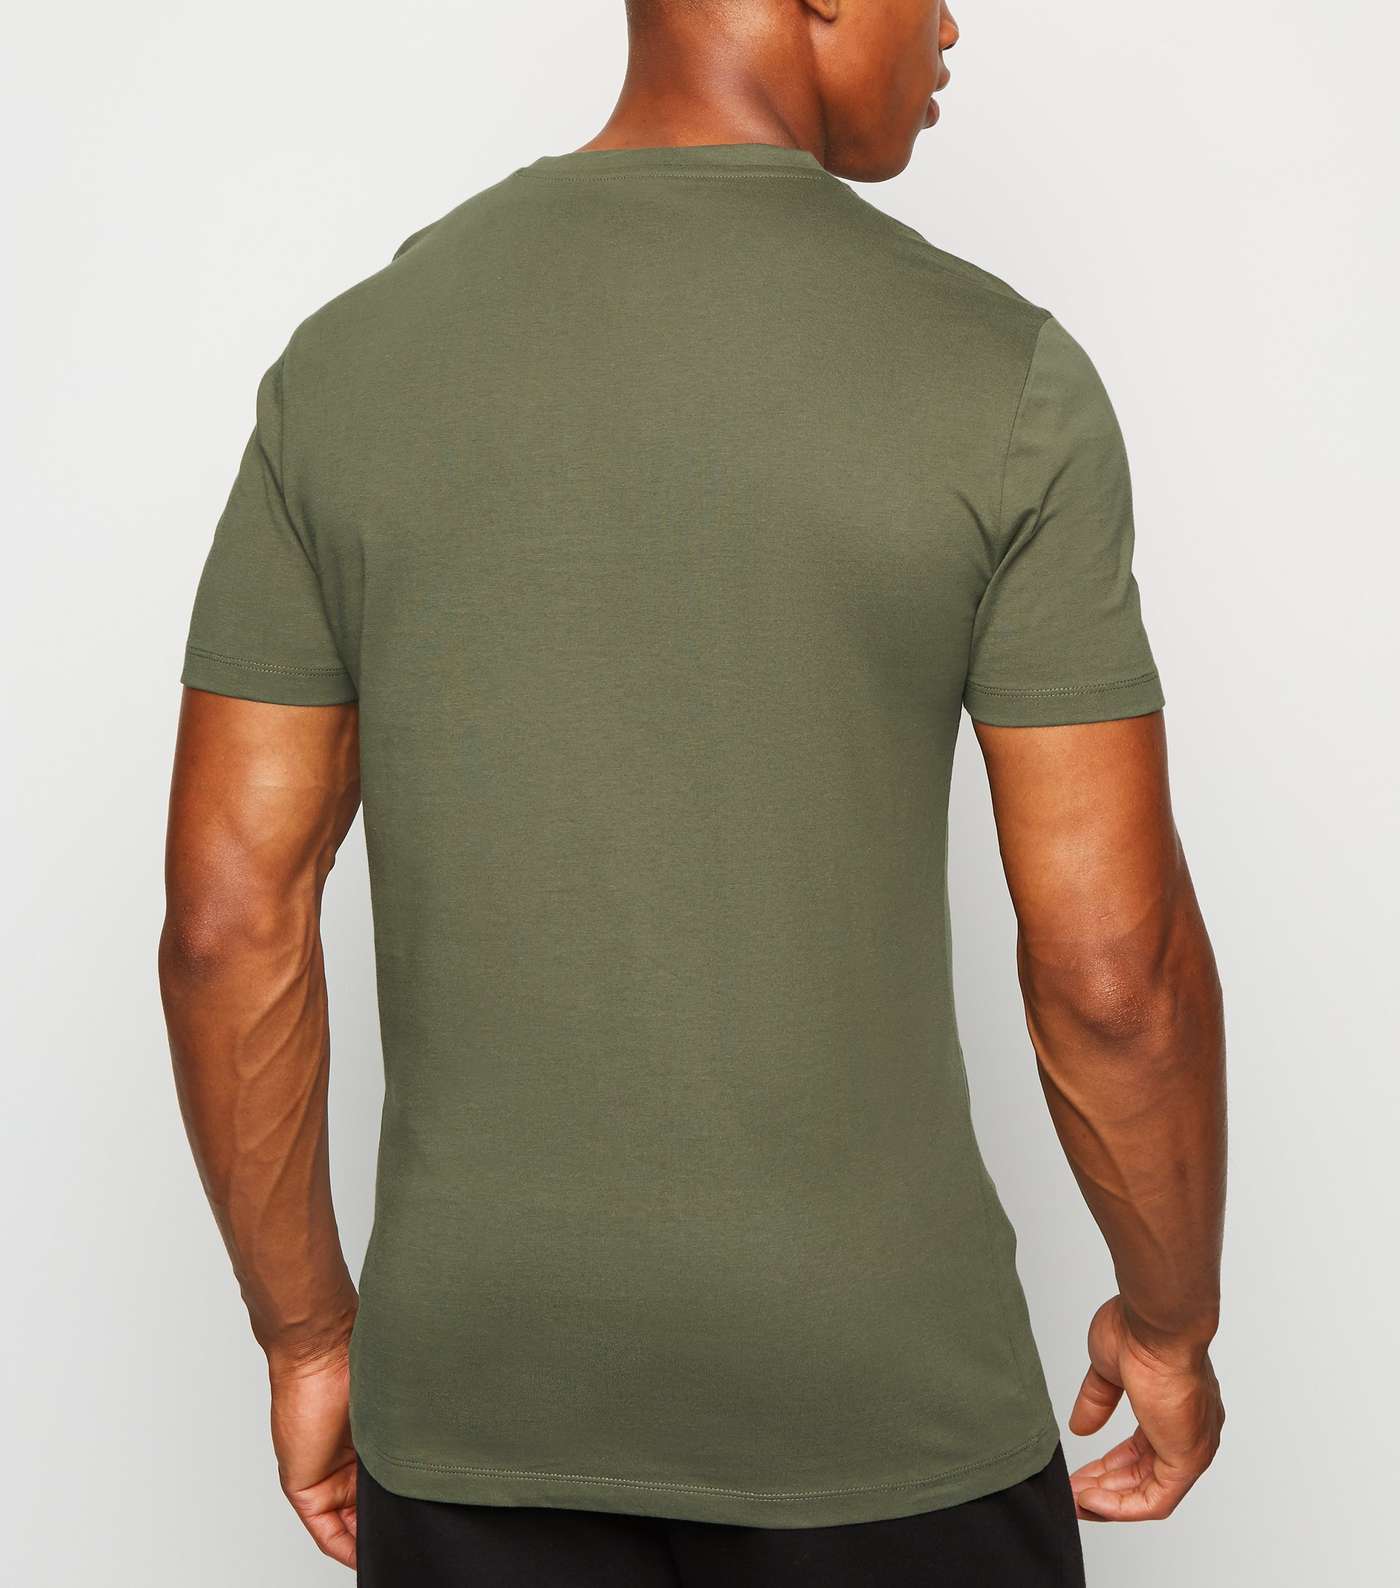 Khaki Short Sleeve Muscle Fit T-Shirt Image 3